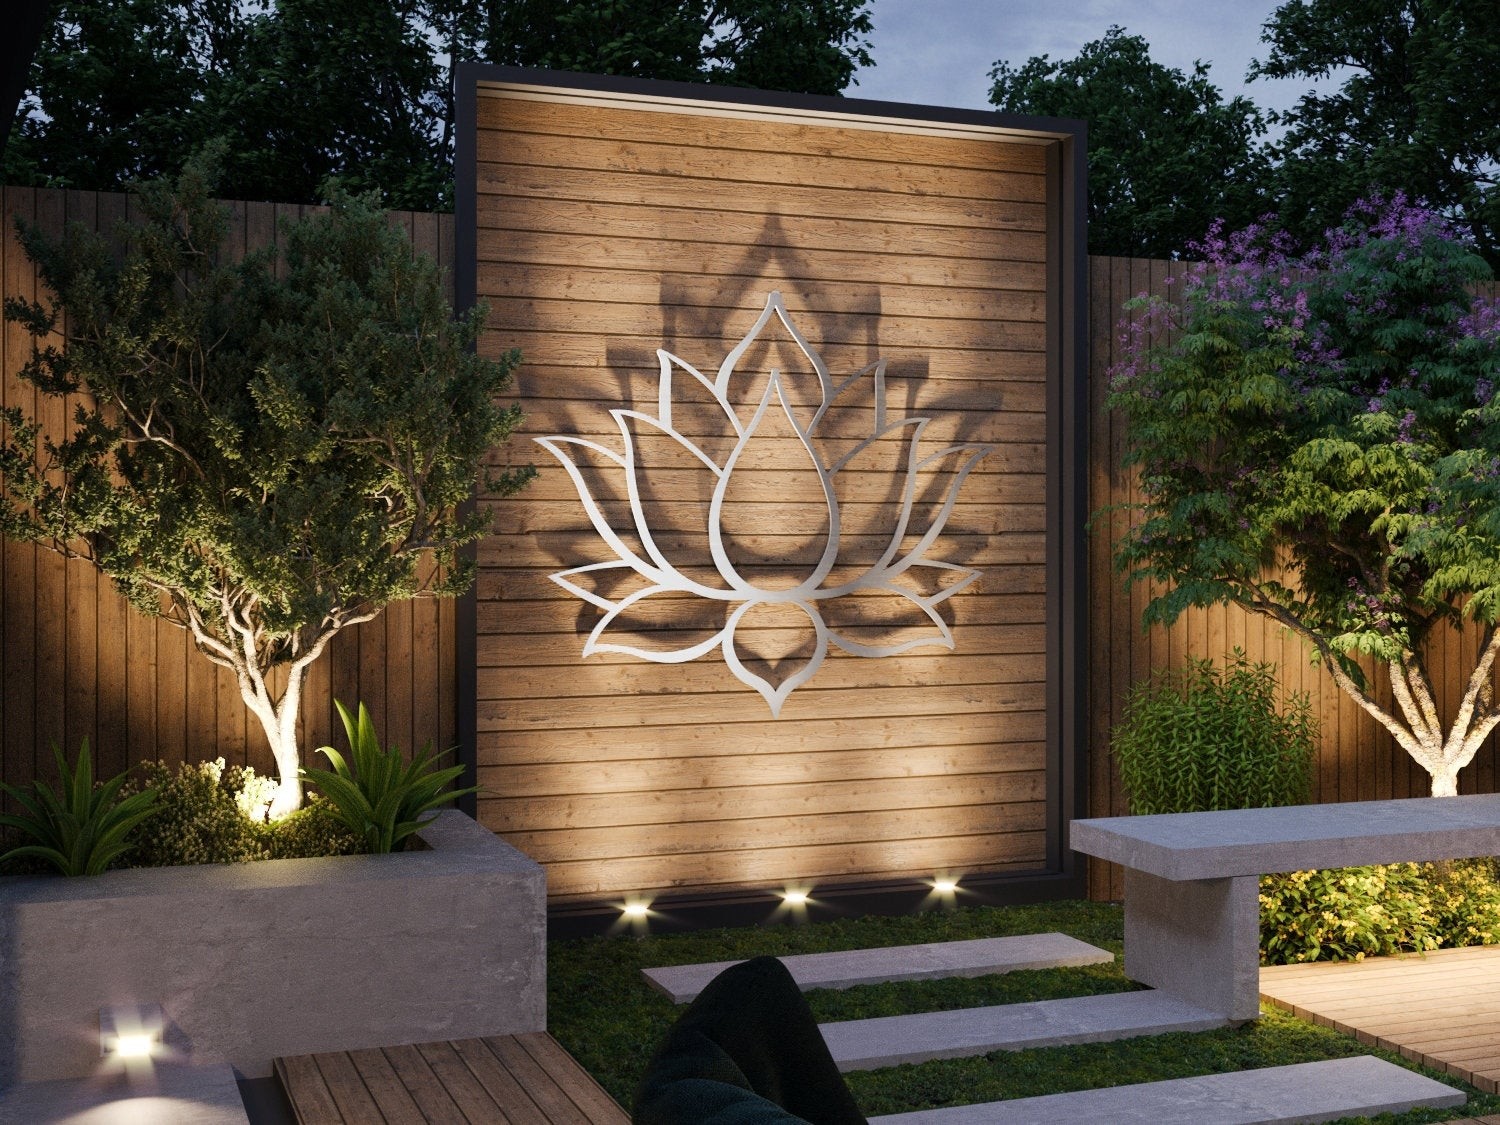 Lotus flower large outdoor metal wall art garden sculpture